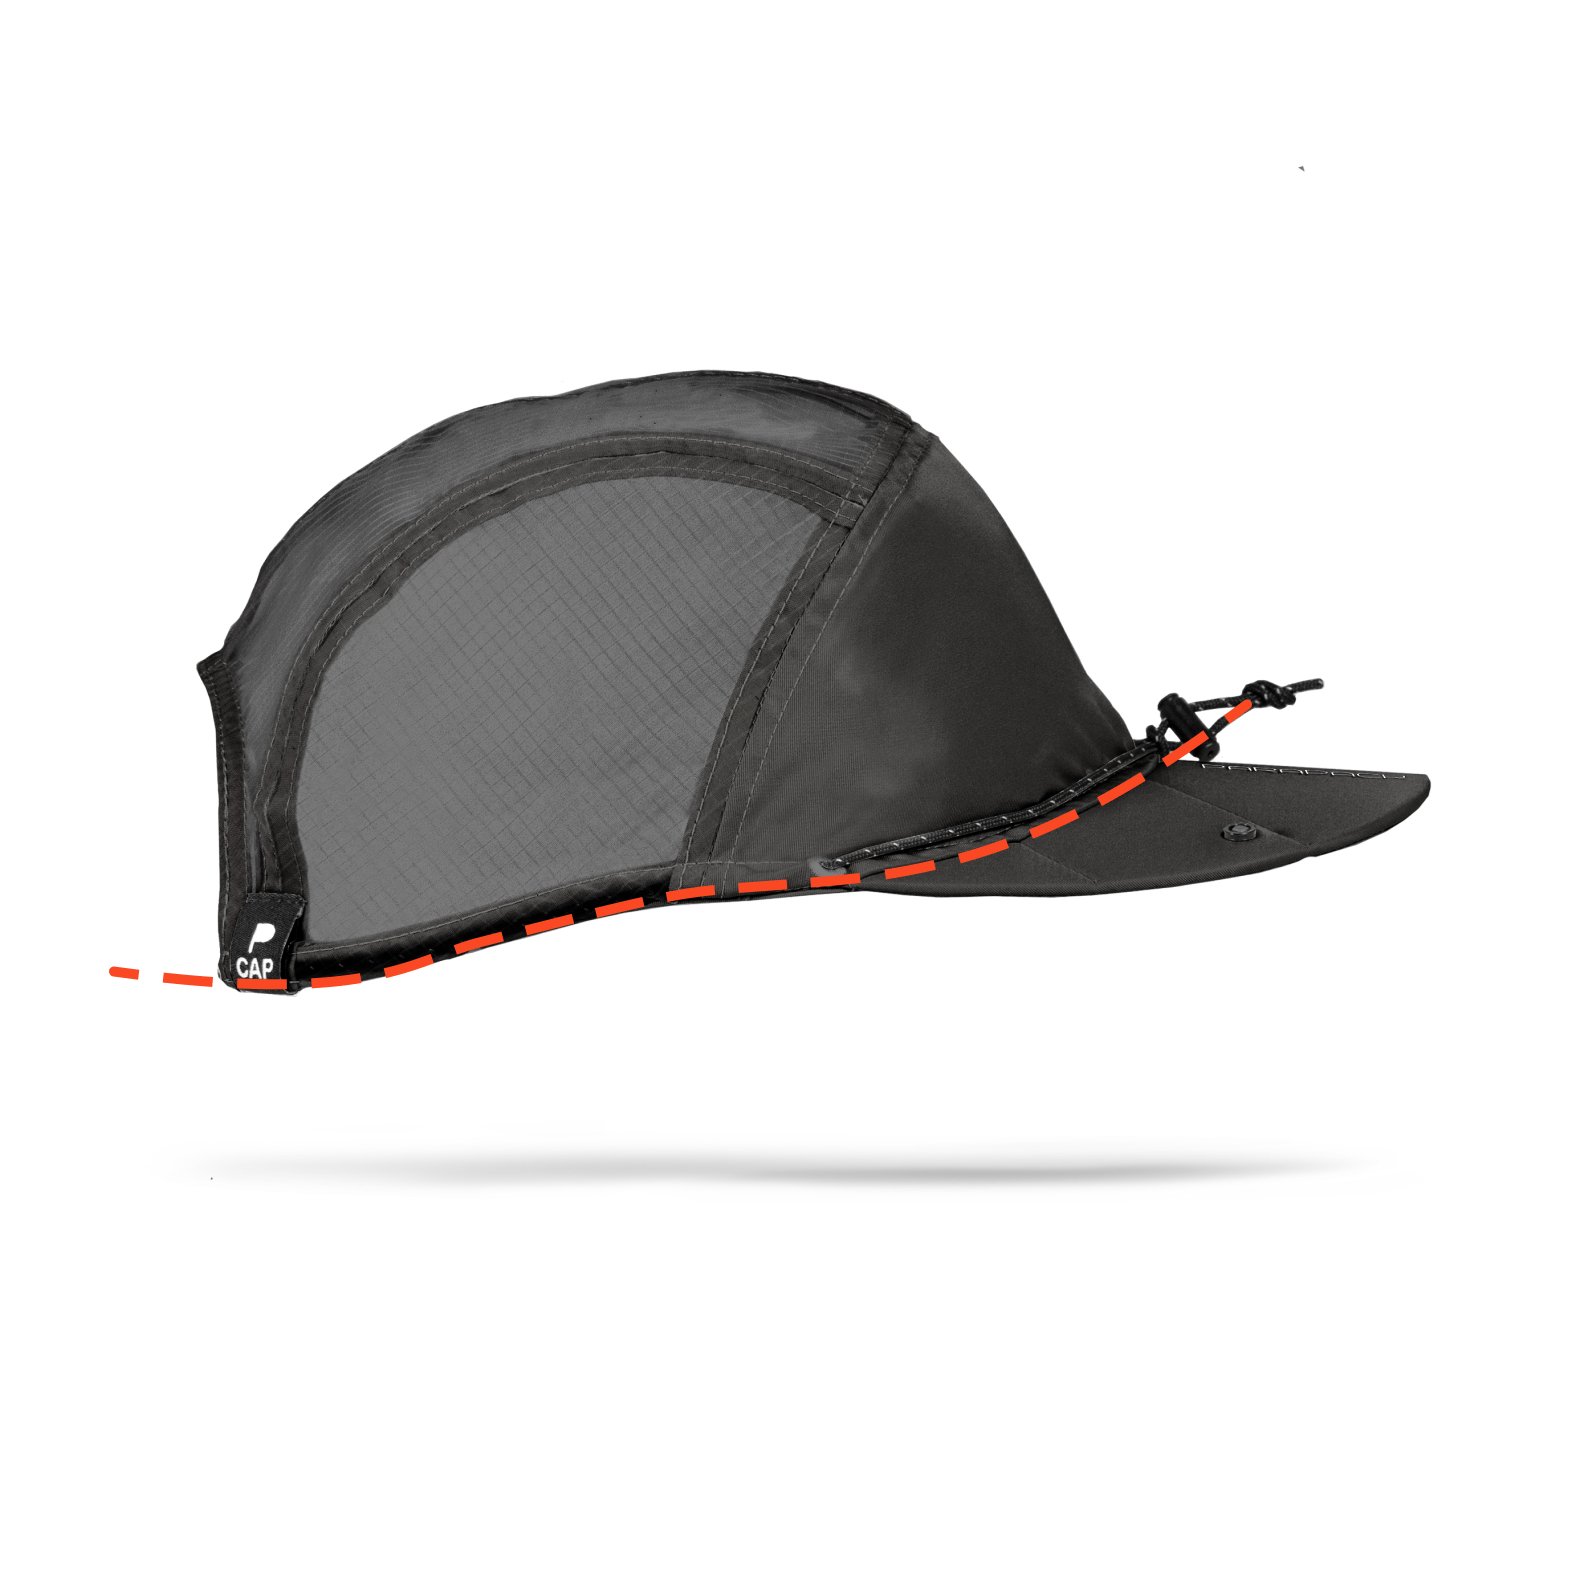 Parapack P-Cap Lite | Ultra-lightweight packable headwear for all